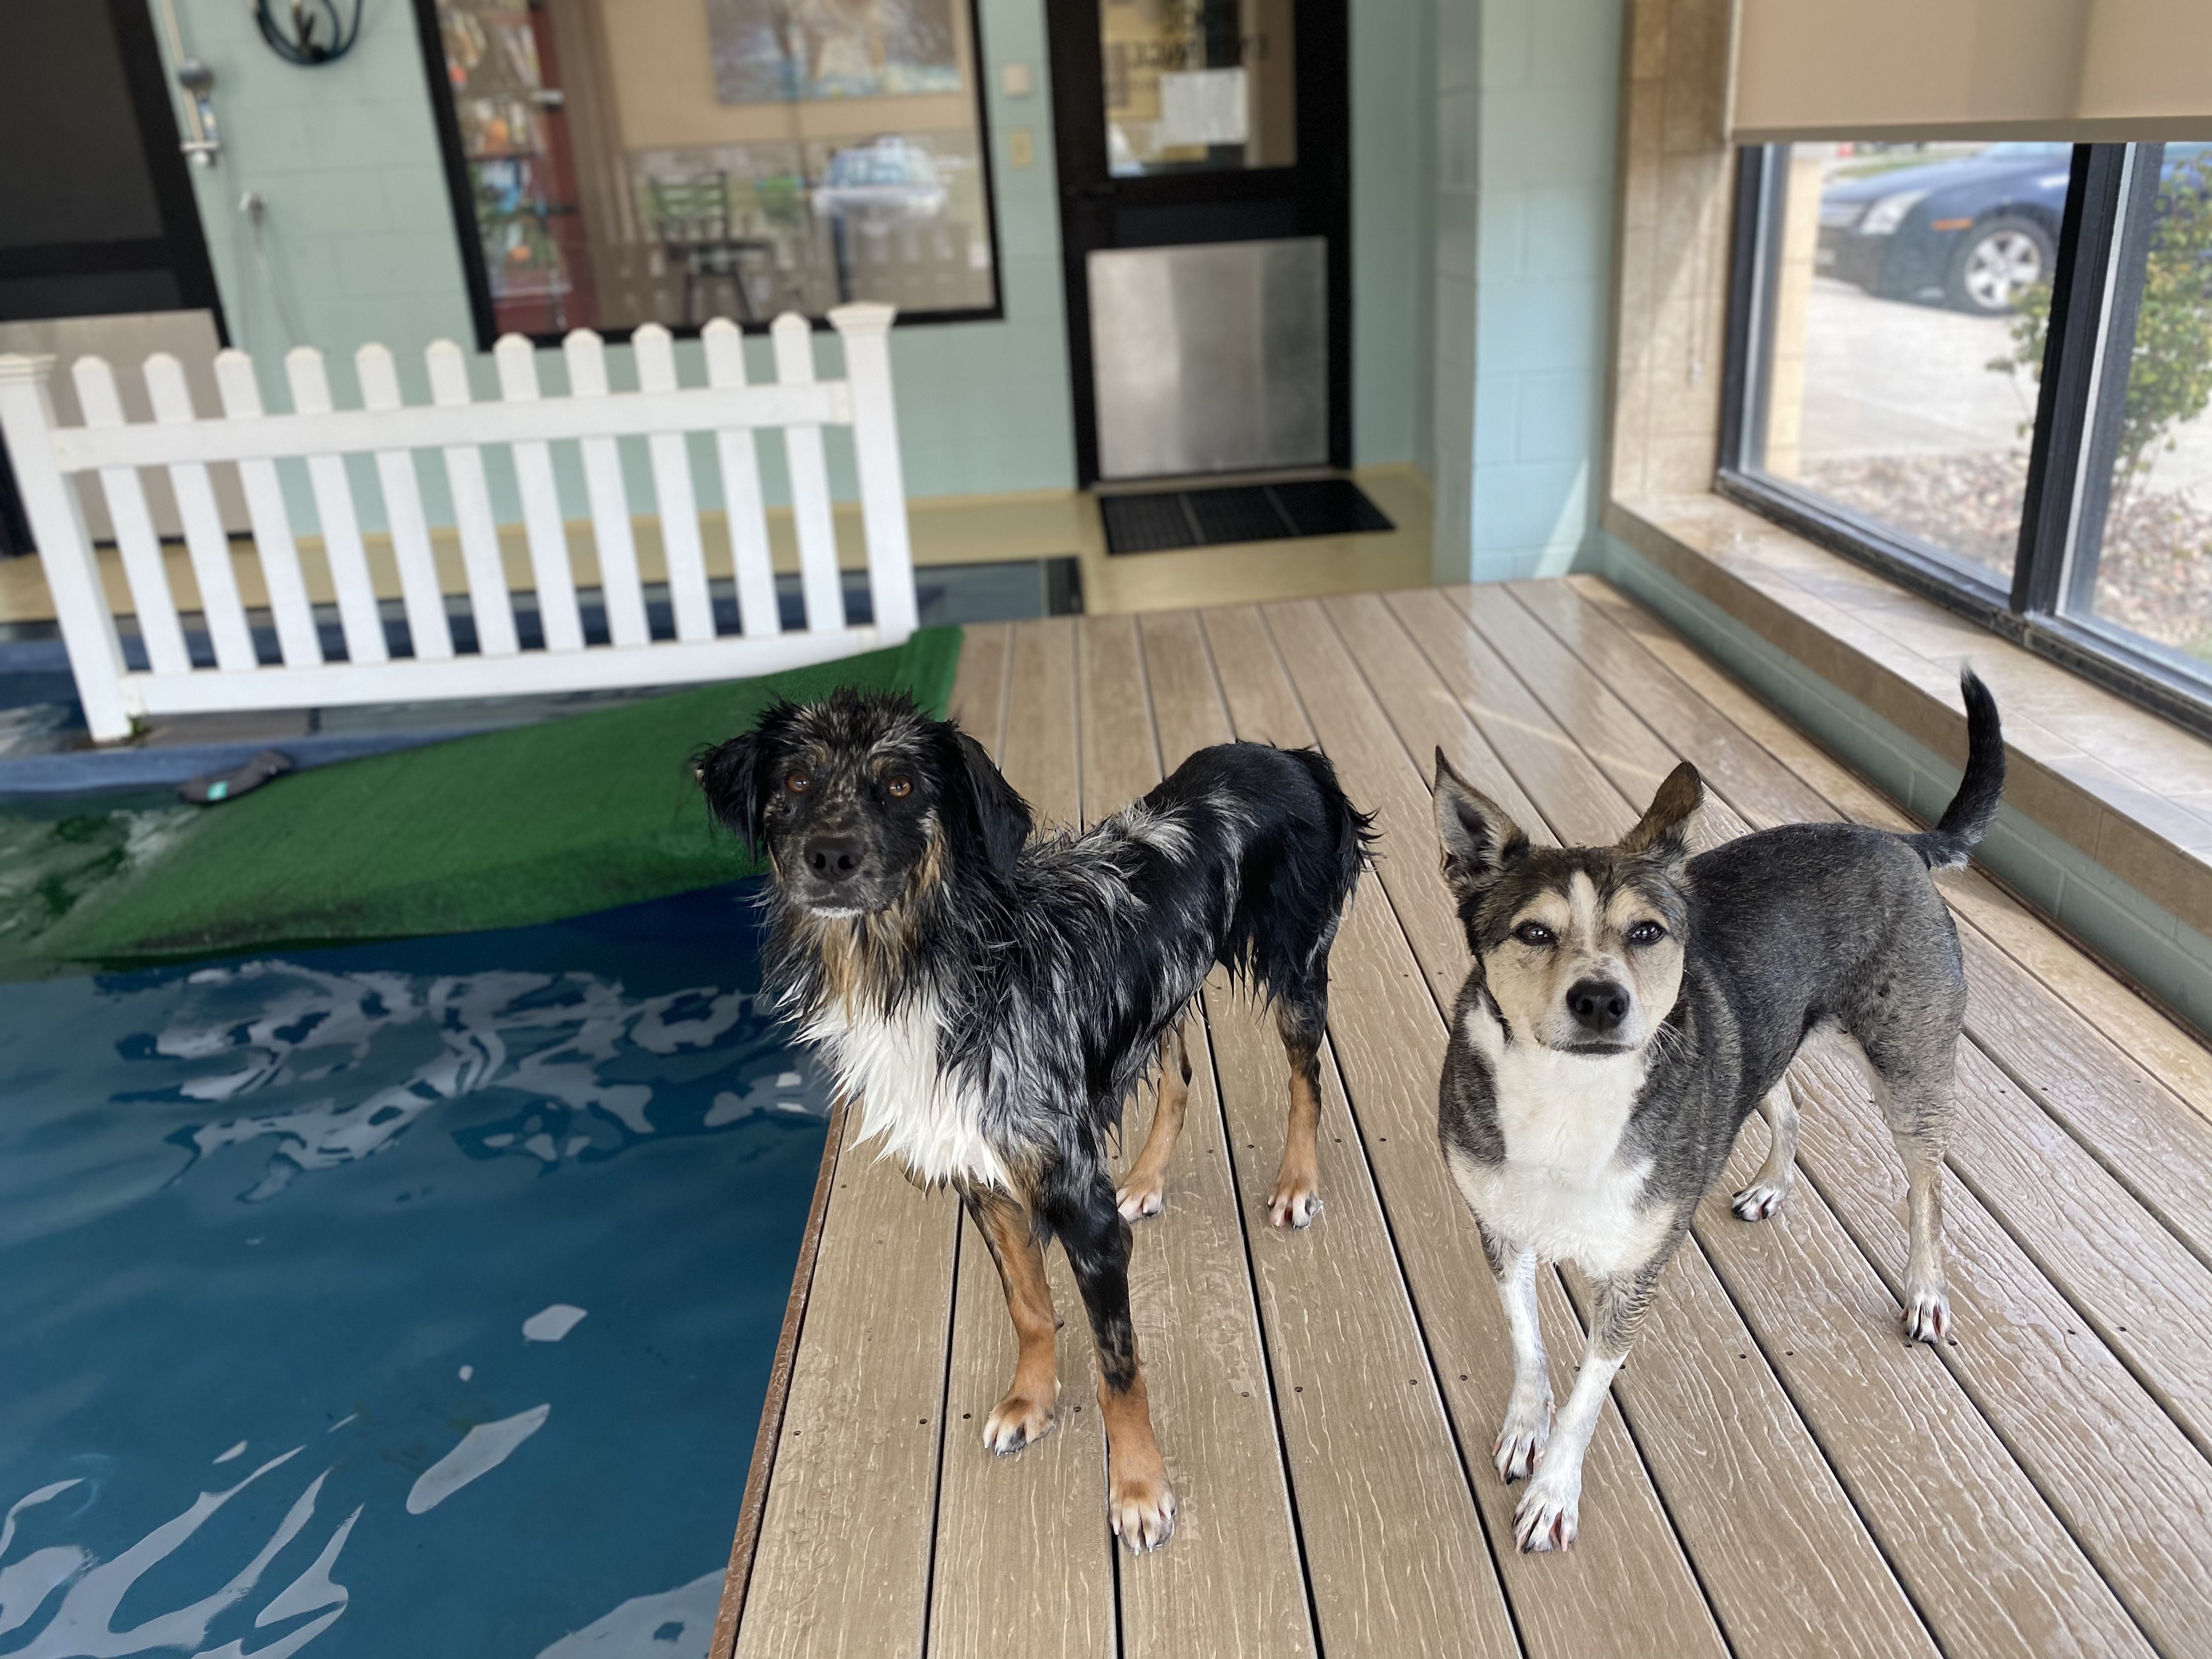 Australian Shepherd and Kelpie mix enjoying pool time